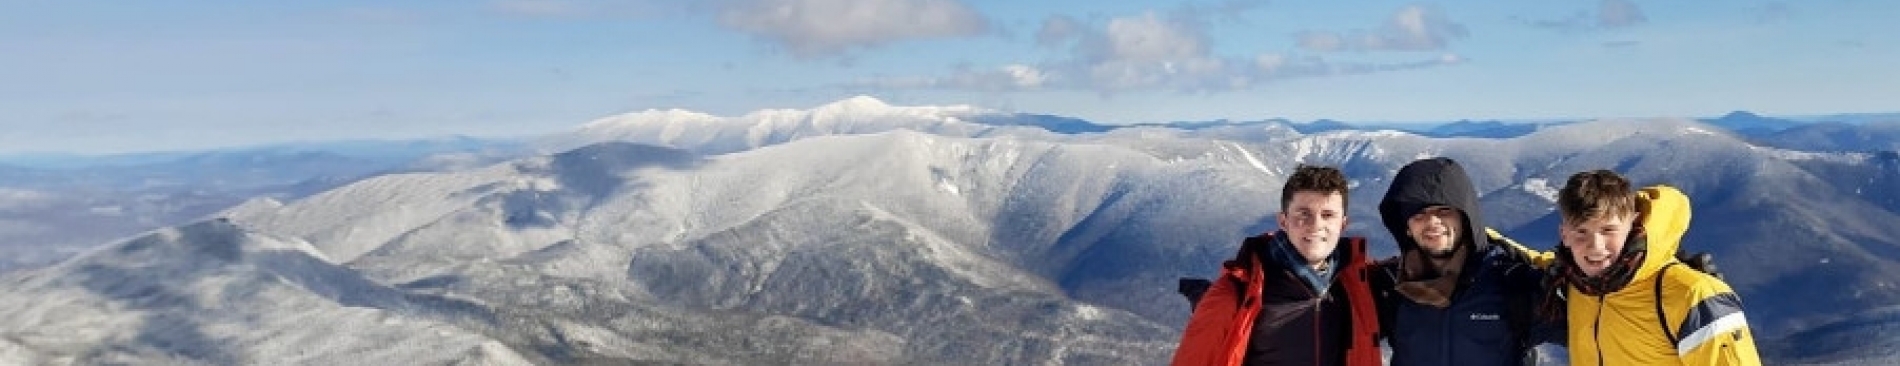 Slideshow: A Trip to New Hampshire’s White Mountains